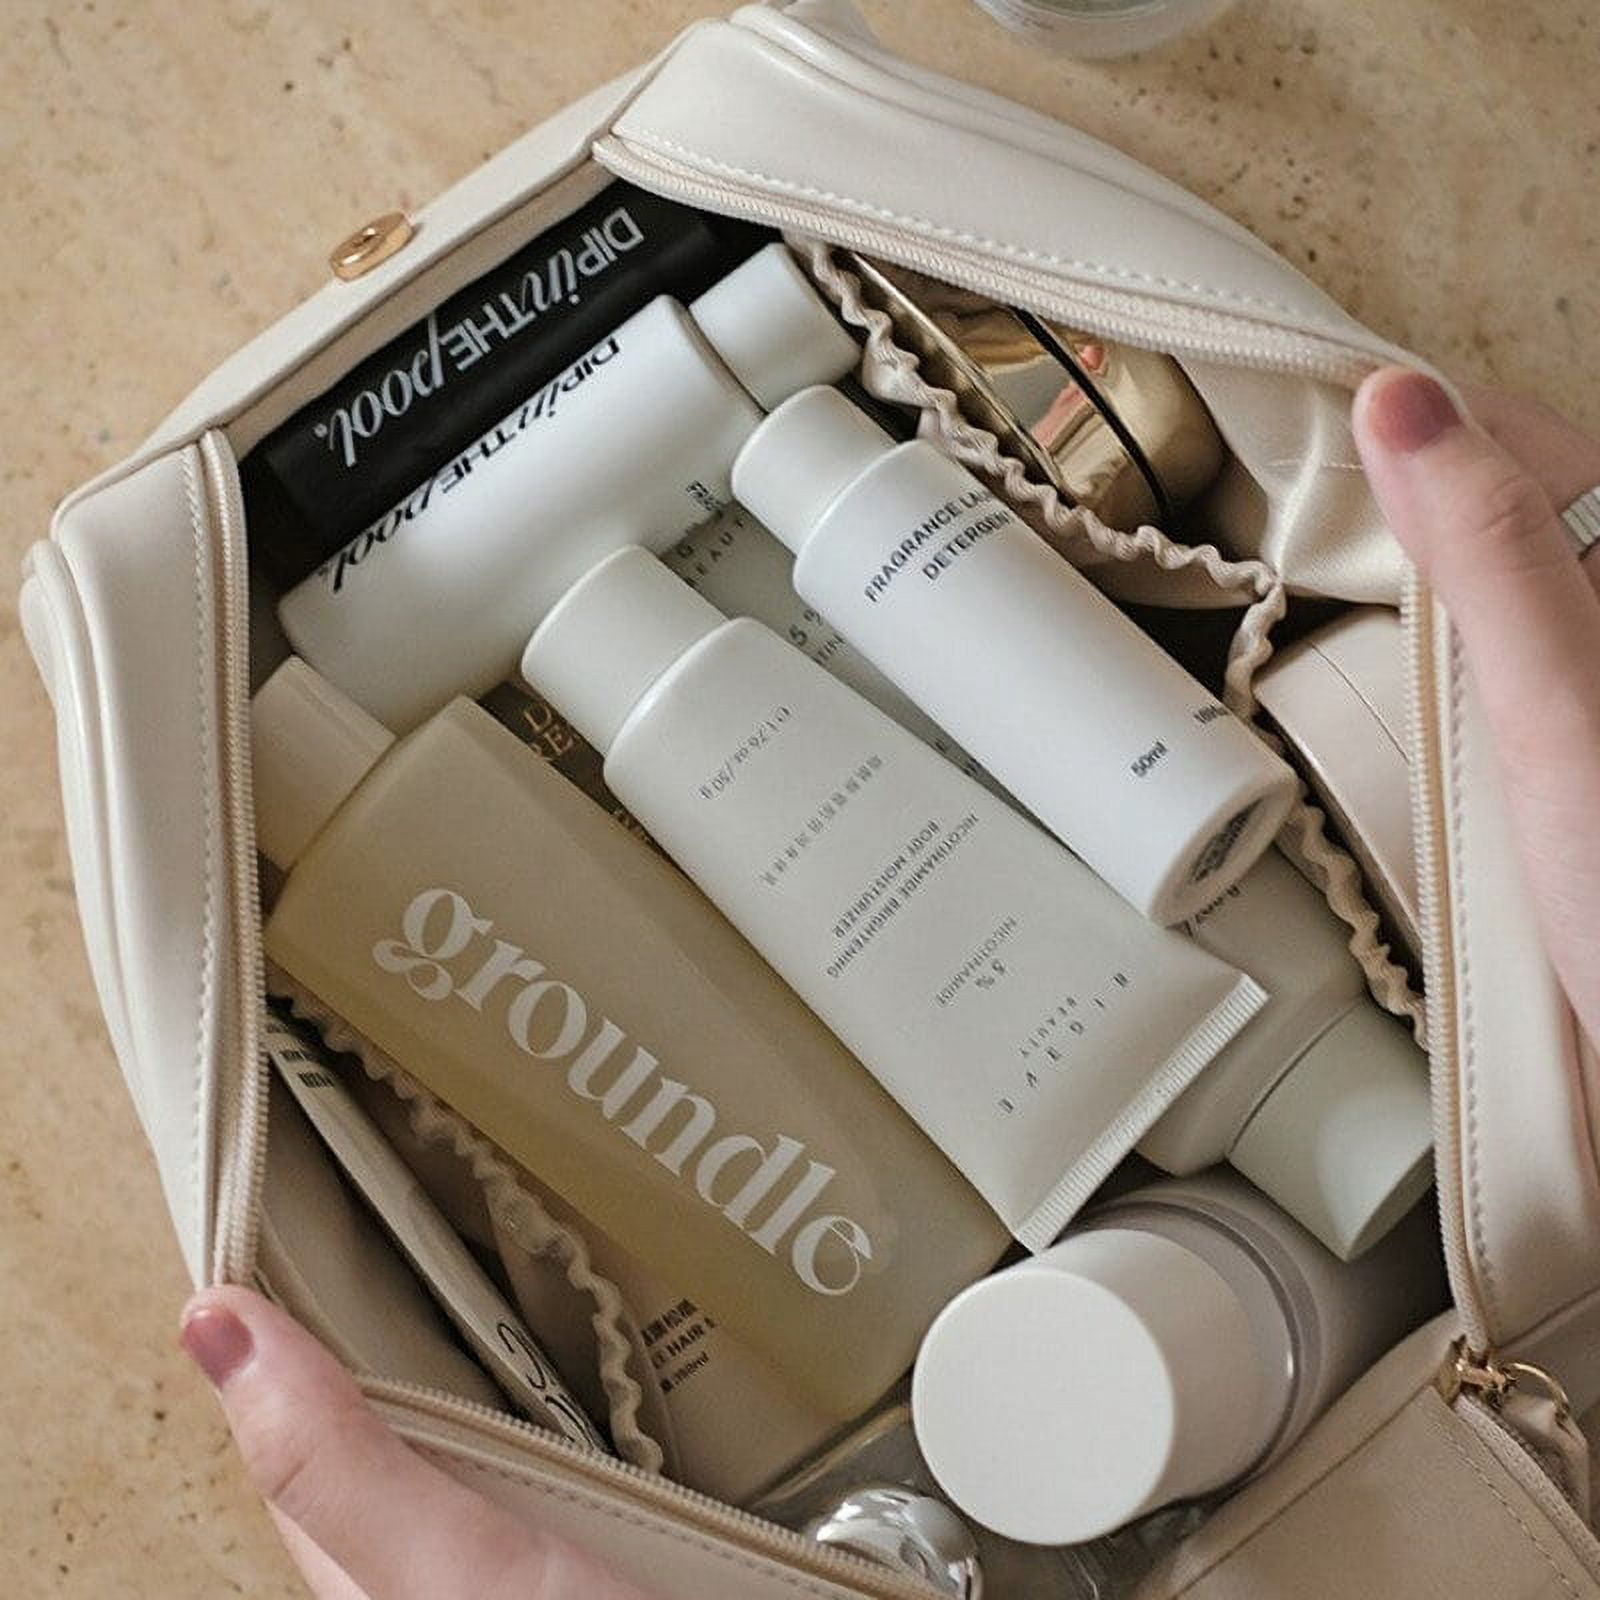 Cosmetic toiletry bags bag large capacity luxury designer cosmetic